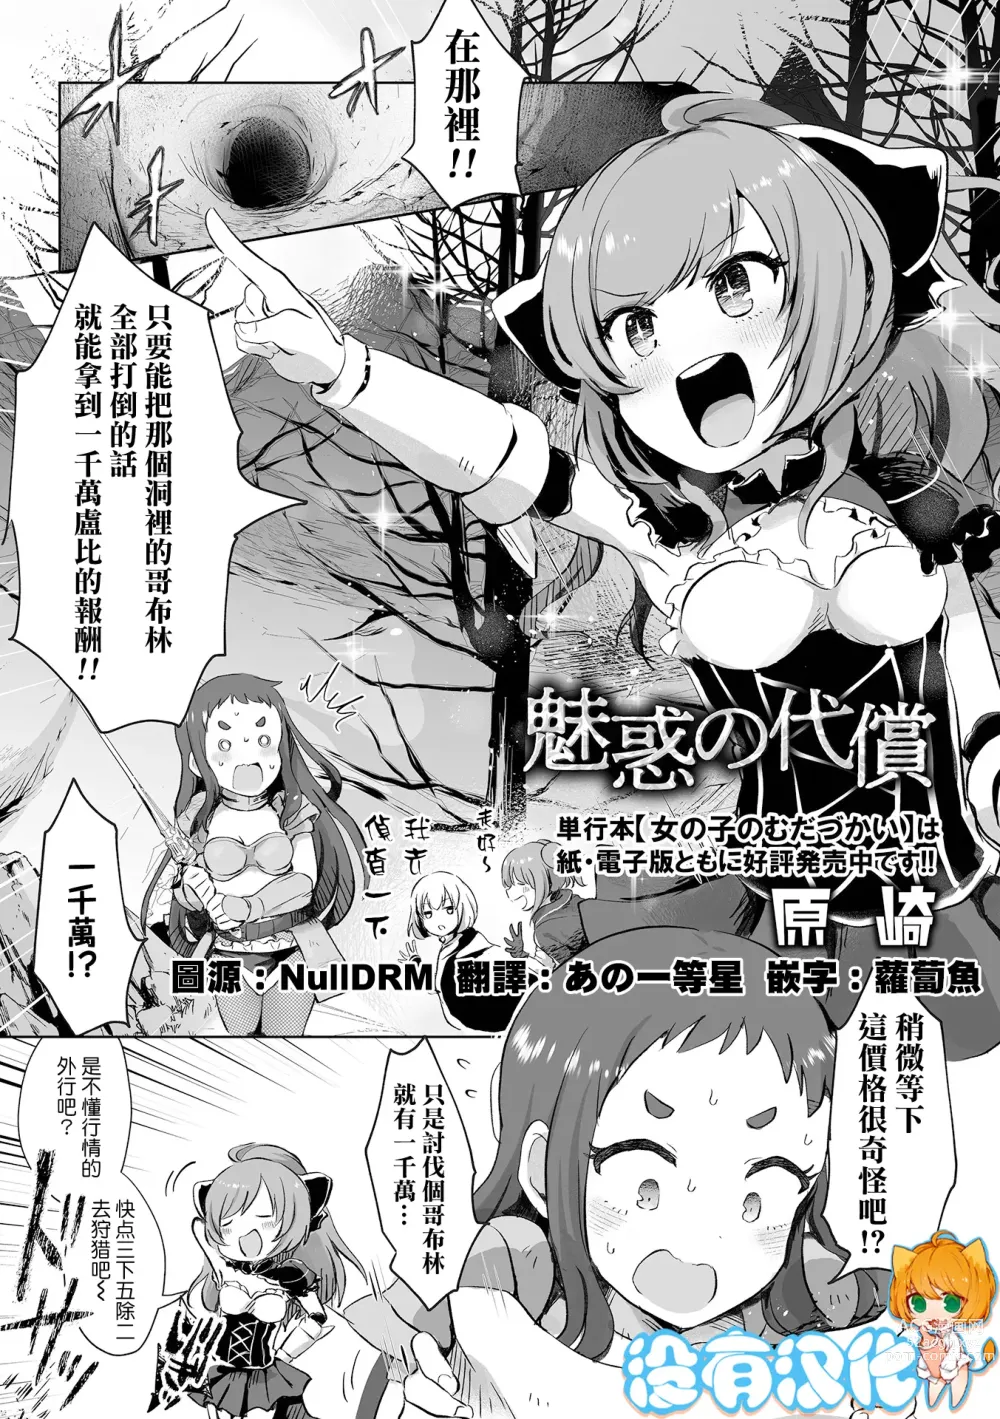 Page 1 of manga Miwaku no Daishou